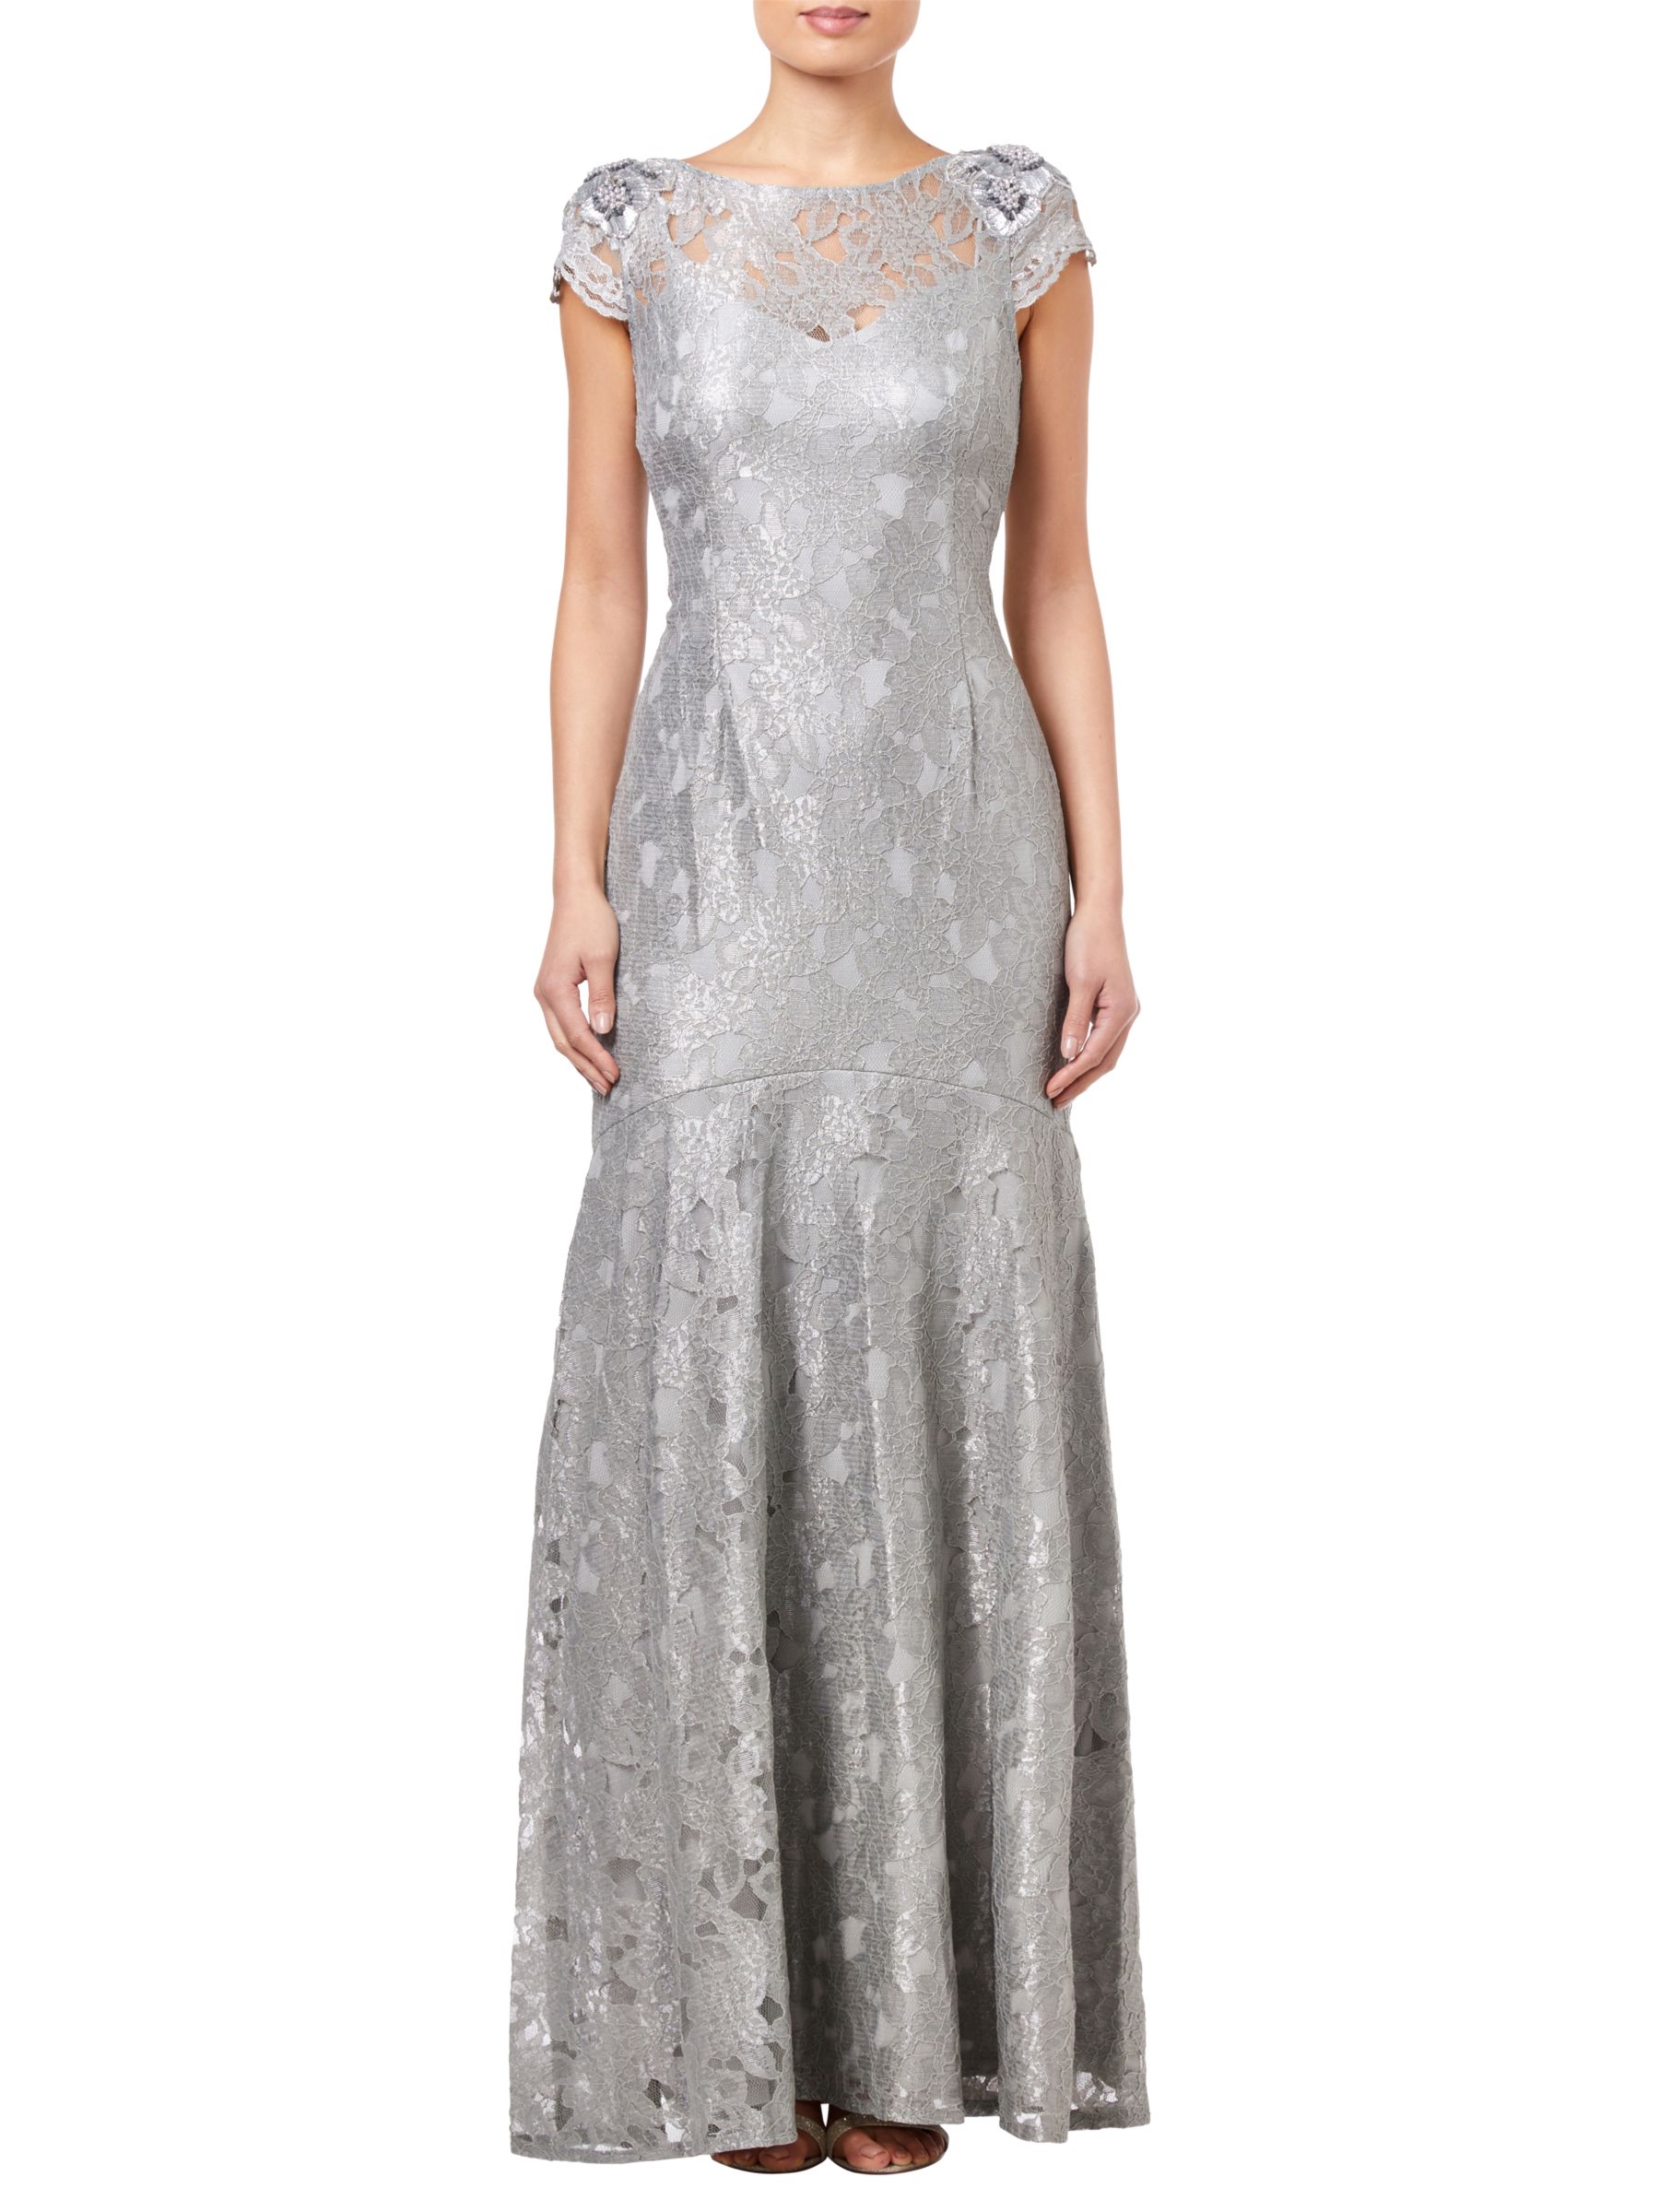 Adrianna Papell Long Metallic Lace Dress, Silver Slate